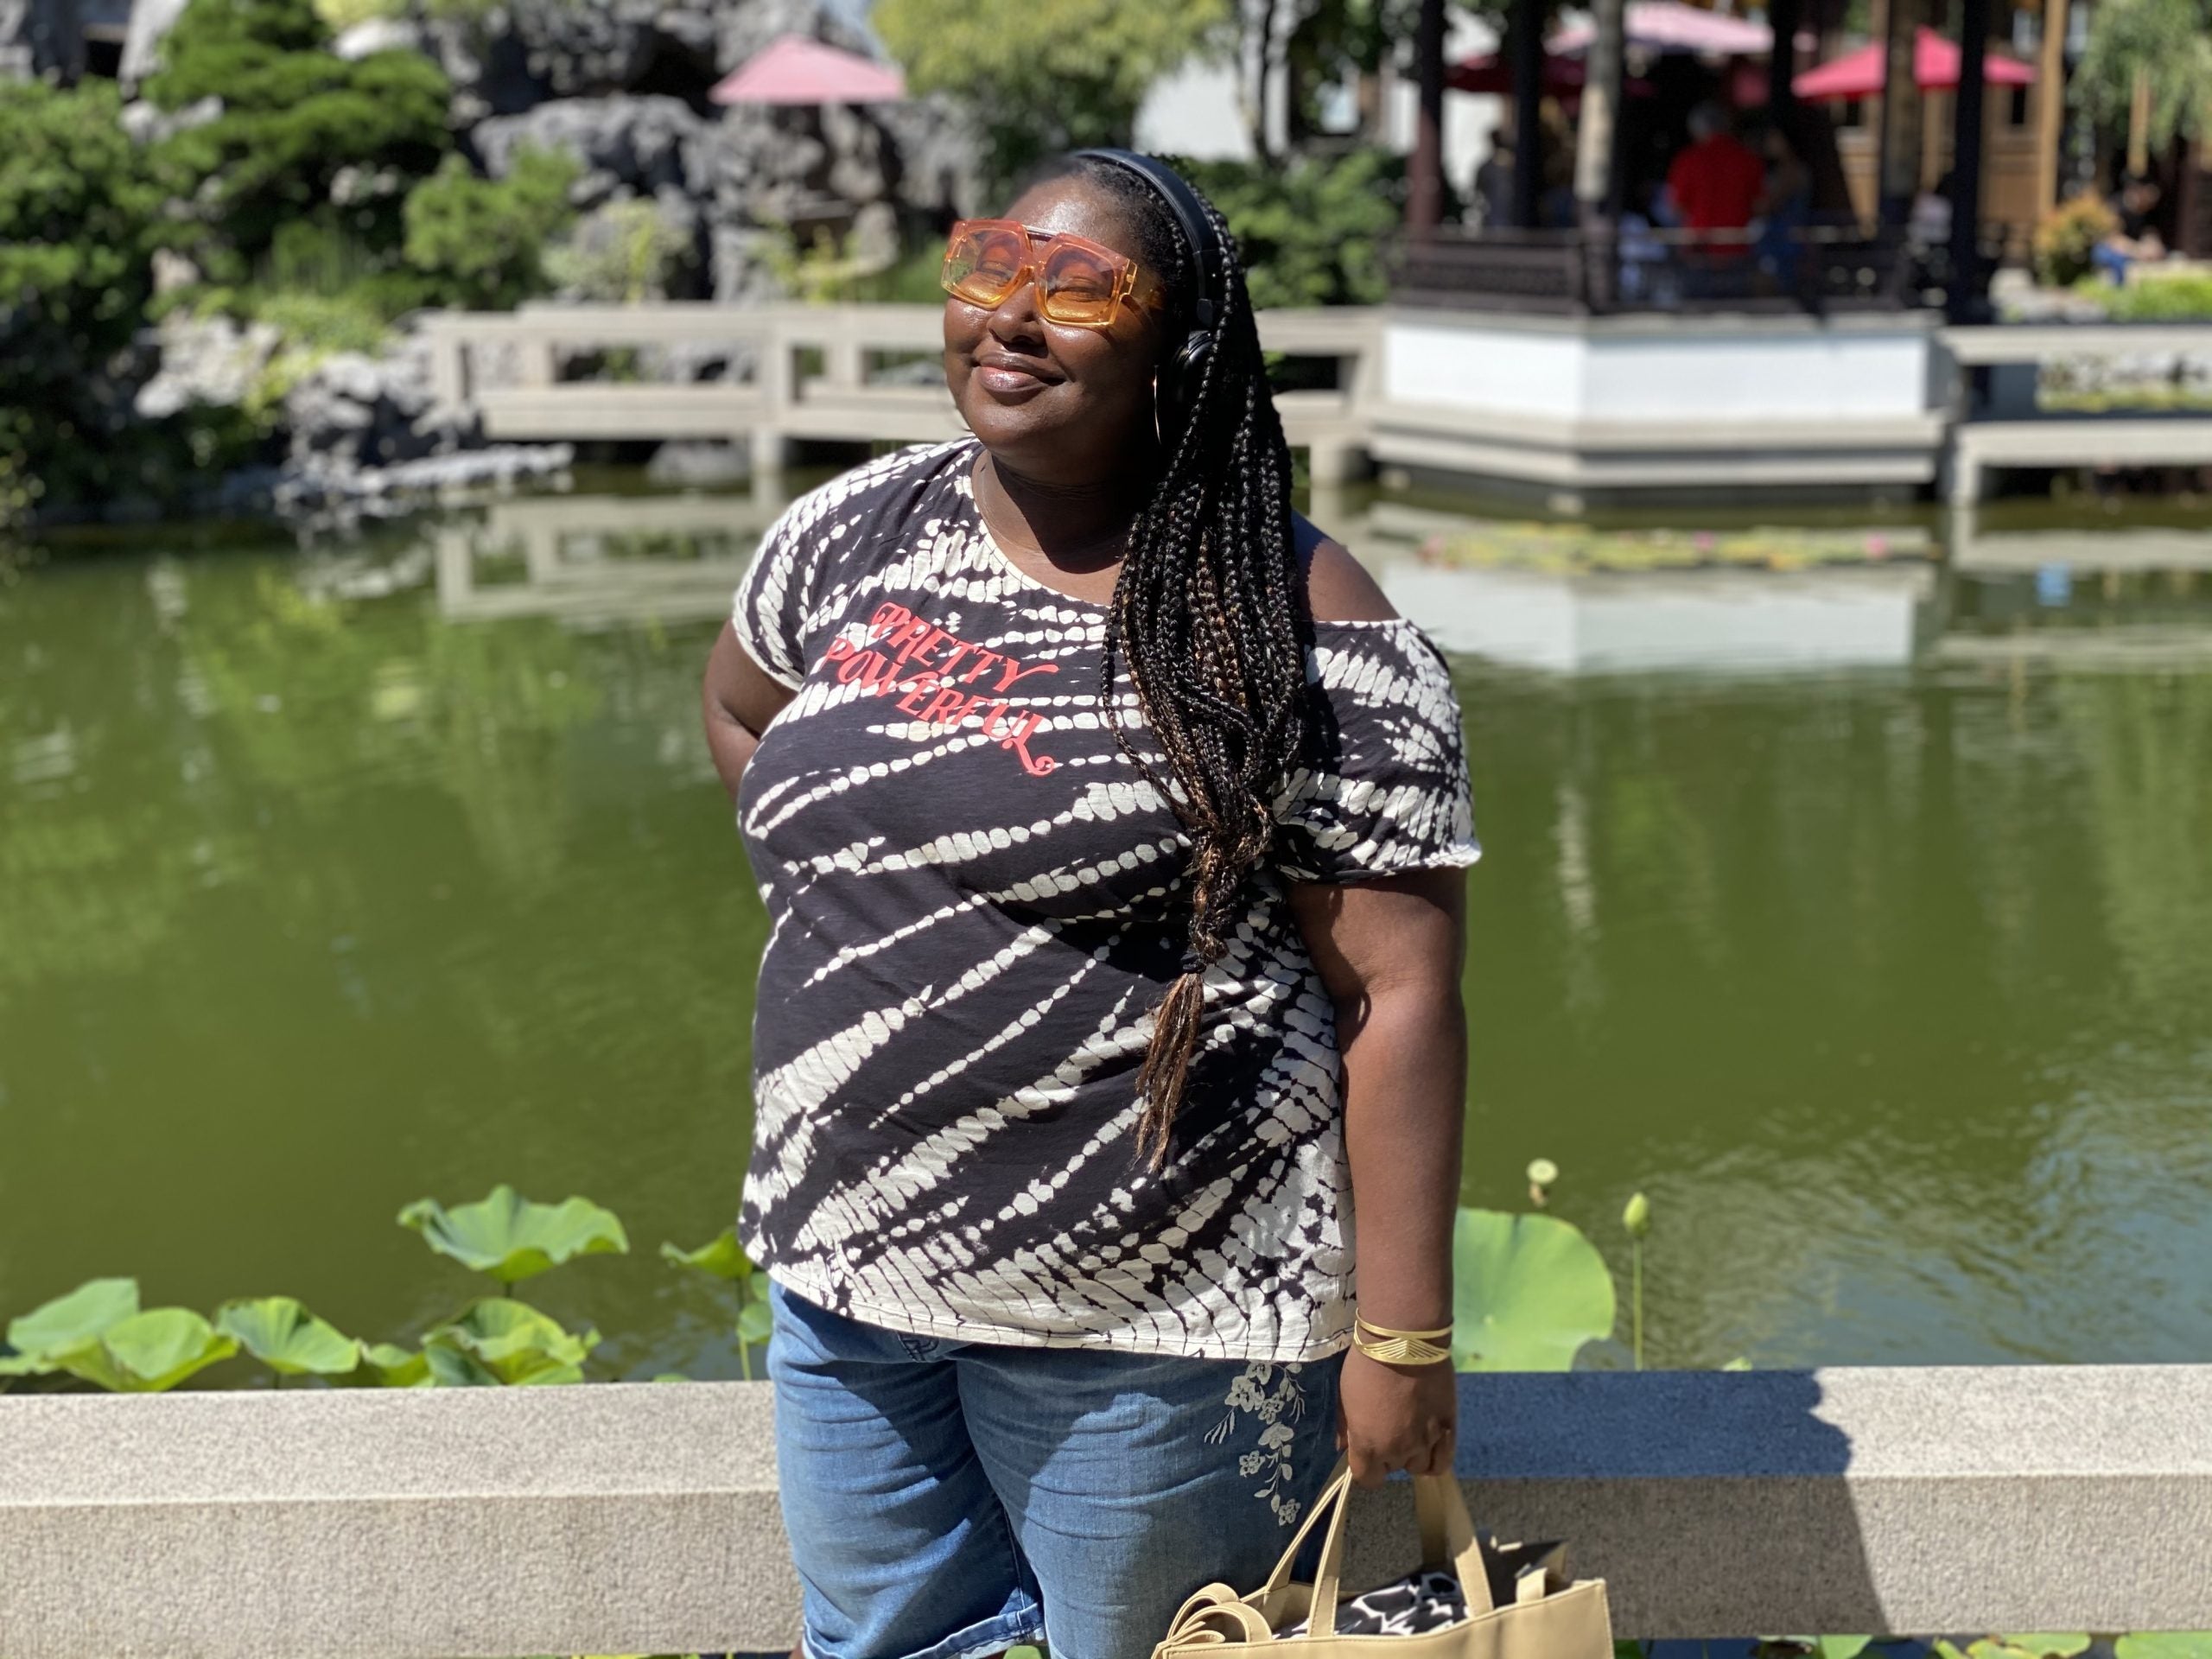 The Black Girl’s Guide To Enjoying Portland